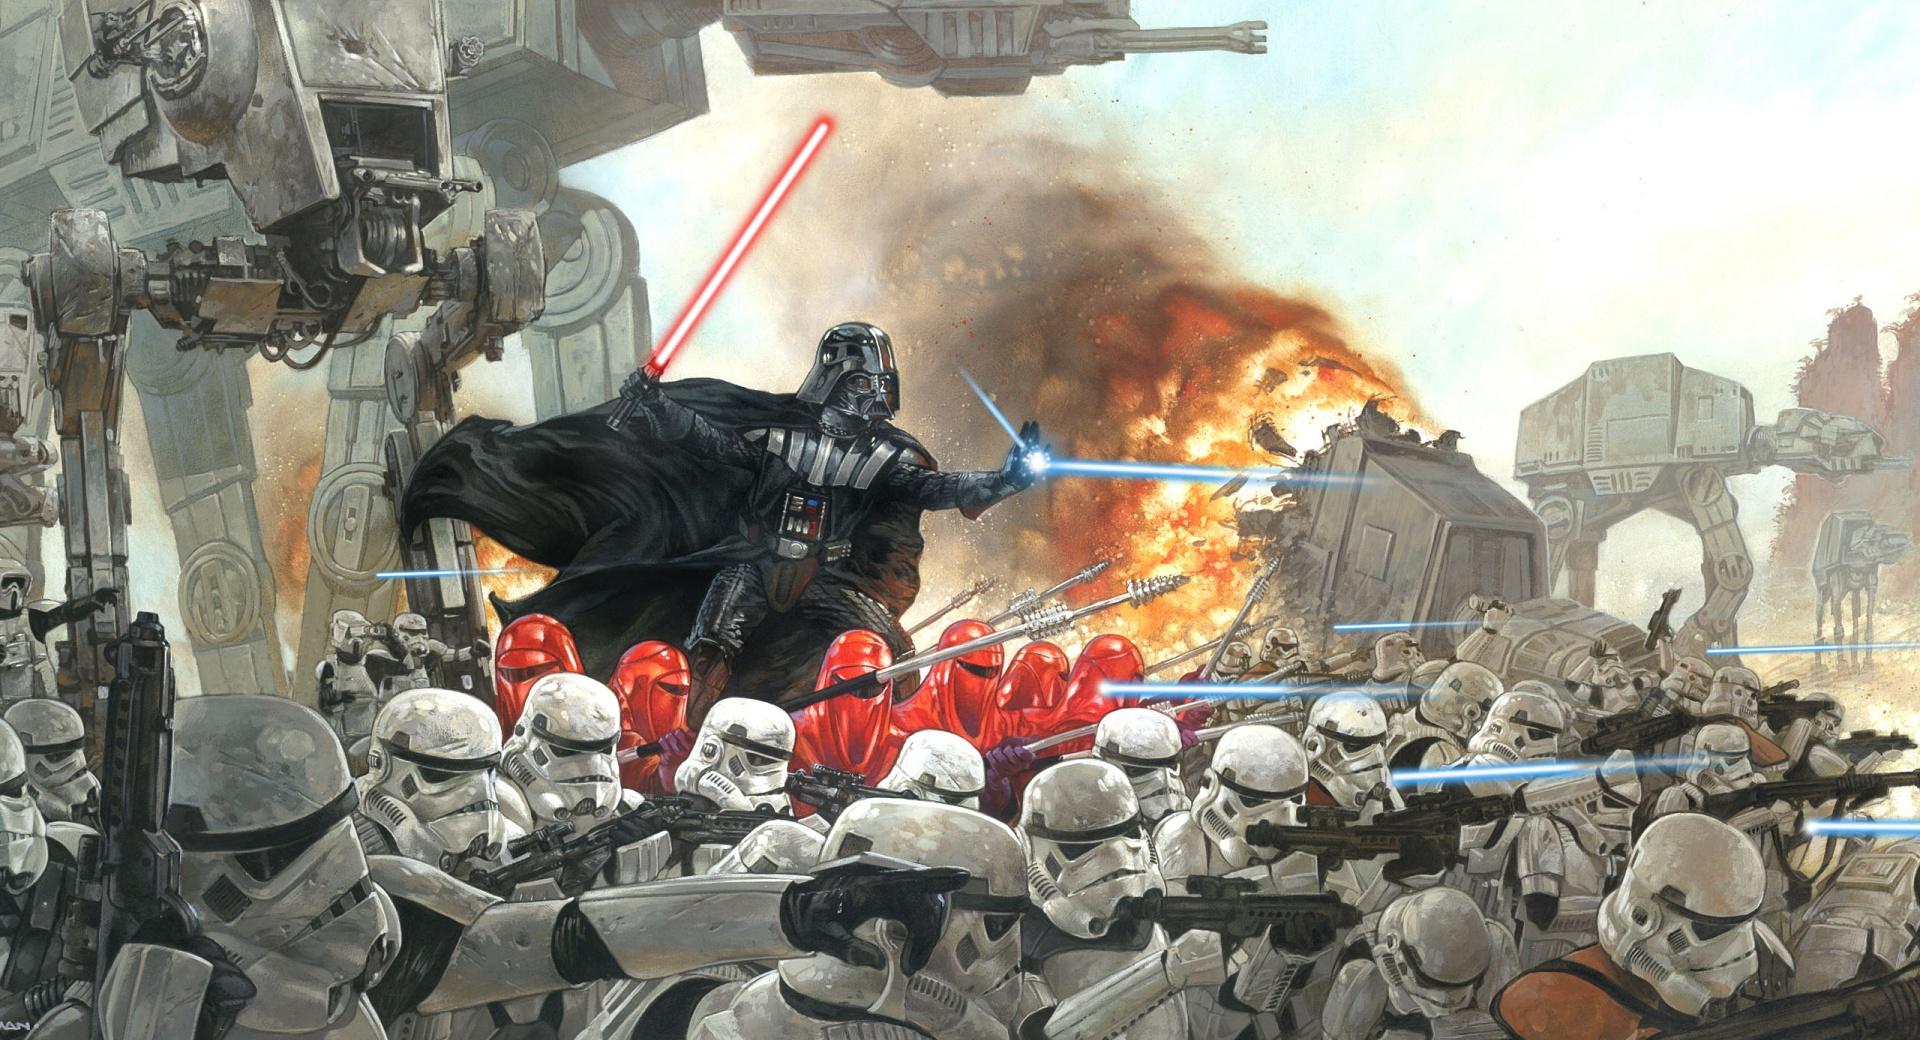 Star Wars Darth Vader at 1280 x 960 size wallpapers HD quality